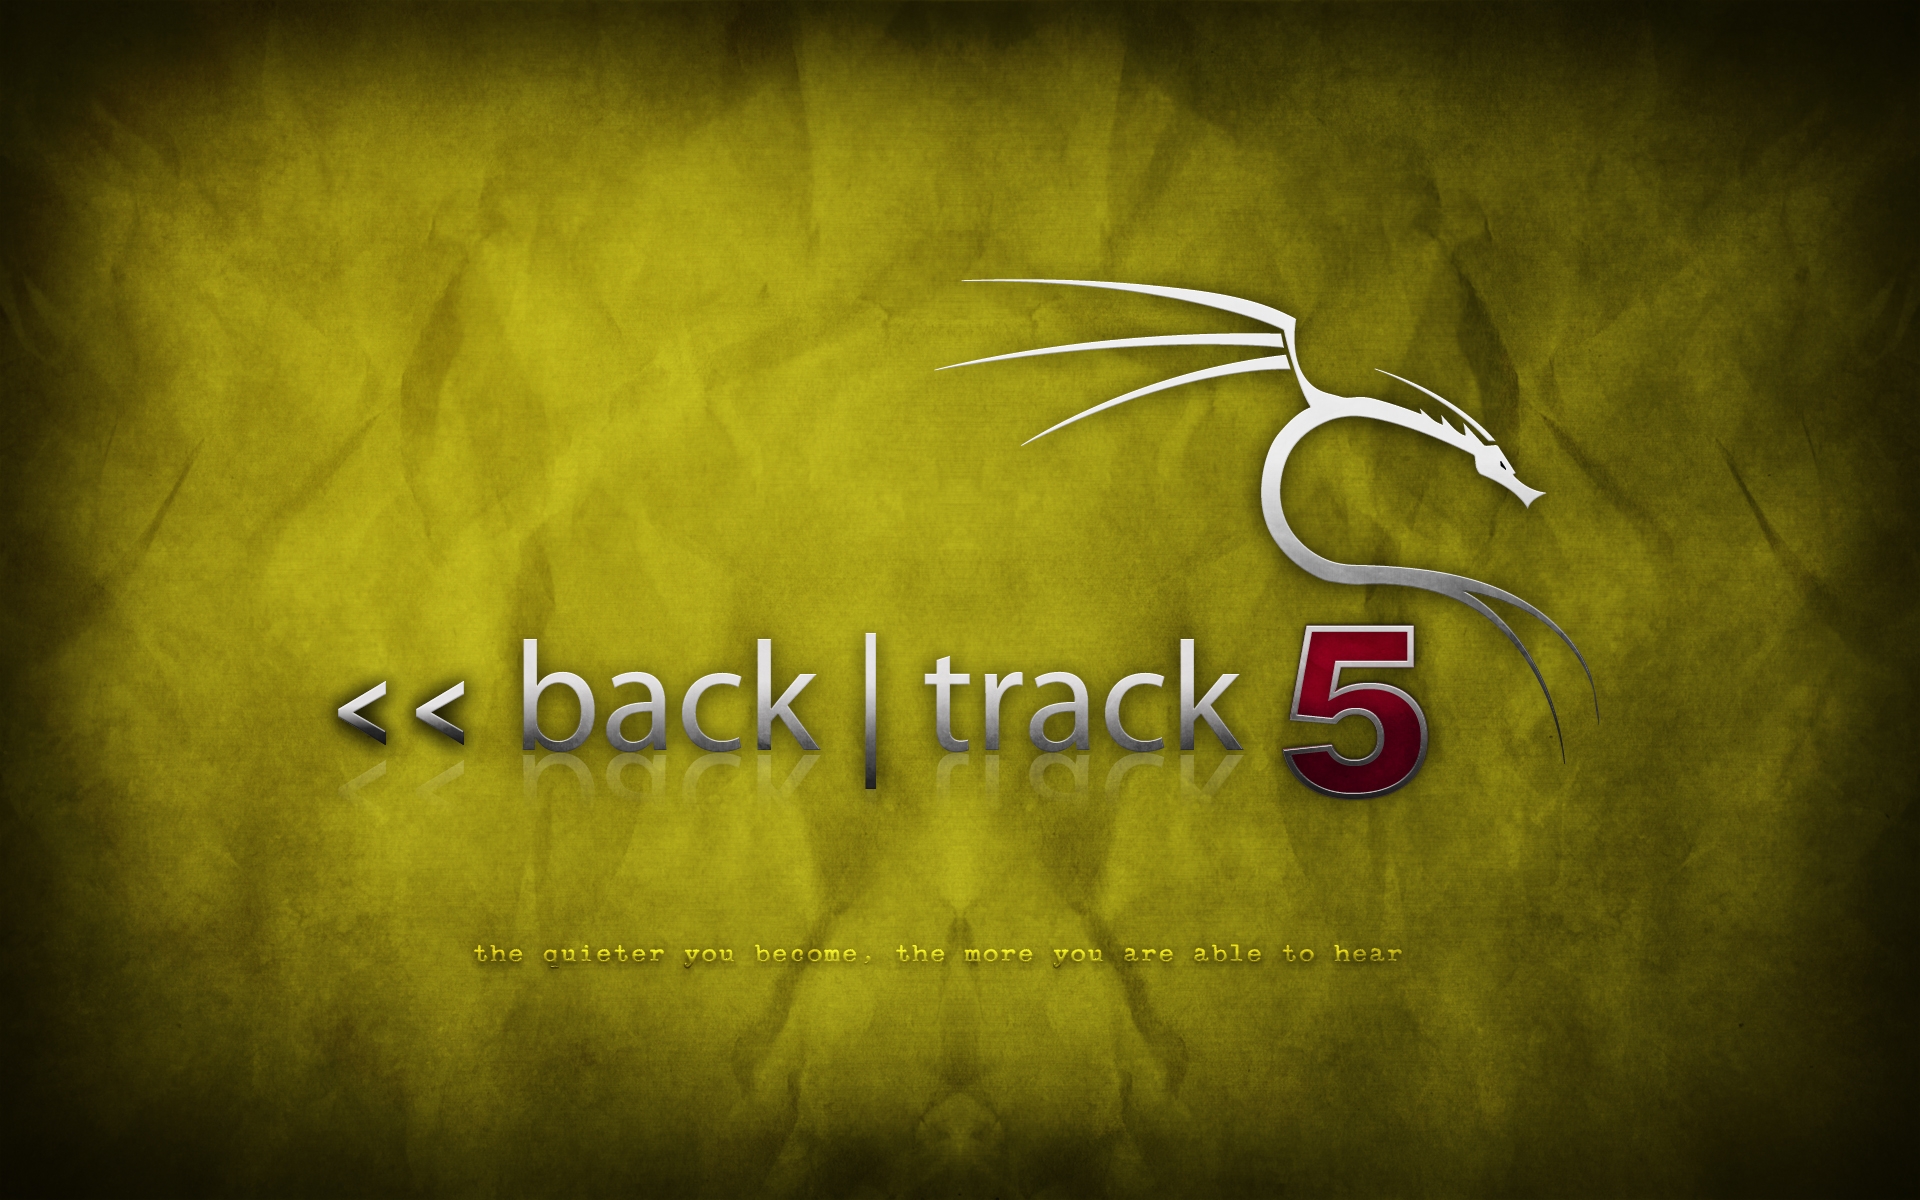 backtrack-5-yellow-1.png